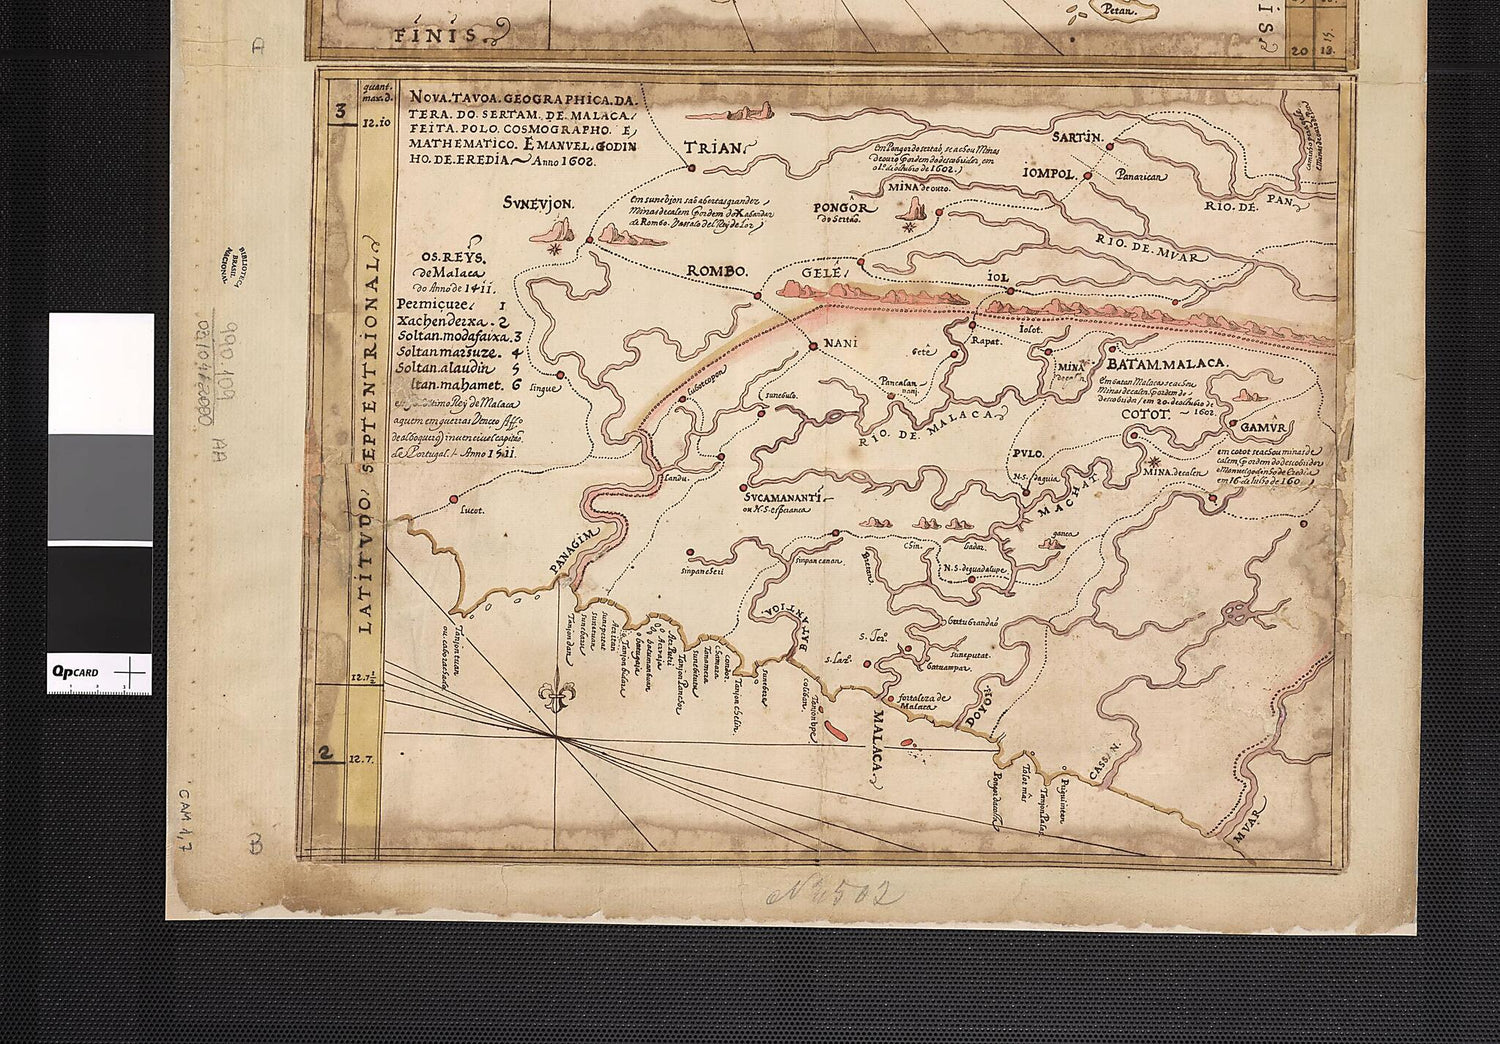 This old map of New Geographic Map of the Interior of Malaca. (Nova Tavoa Geographica Da Tera Do Sertam De Malaca) from 1602 was created by Manuel Godinho De Eredia in 1602